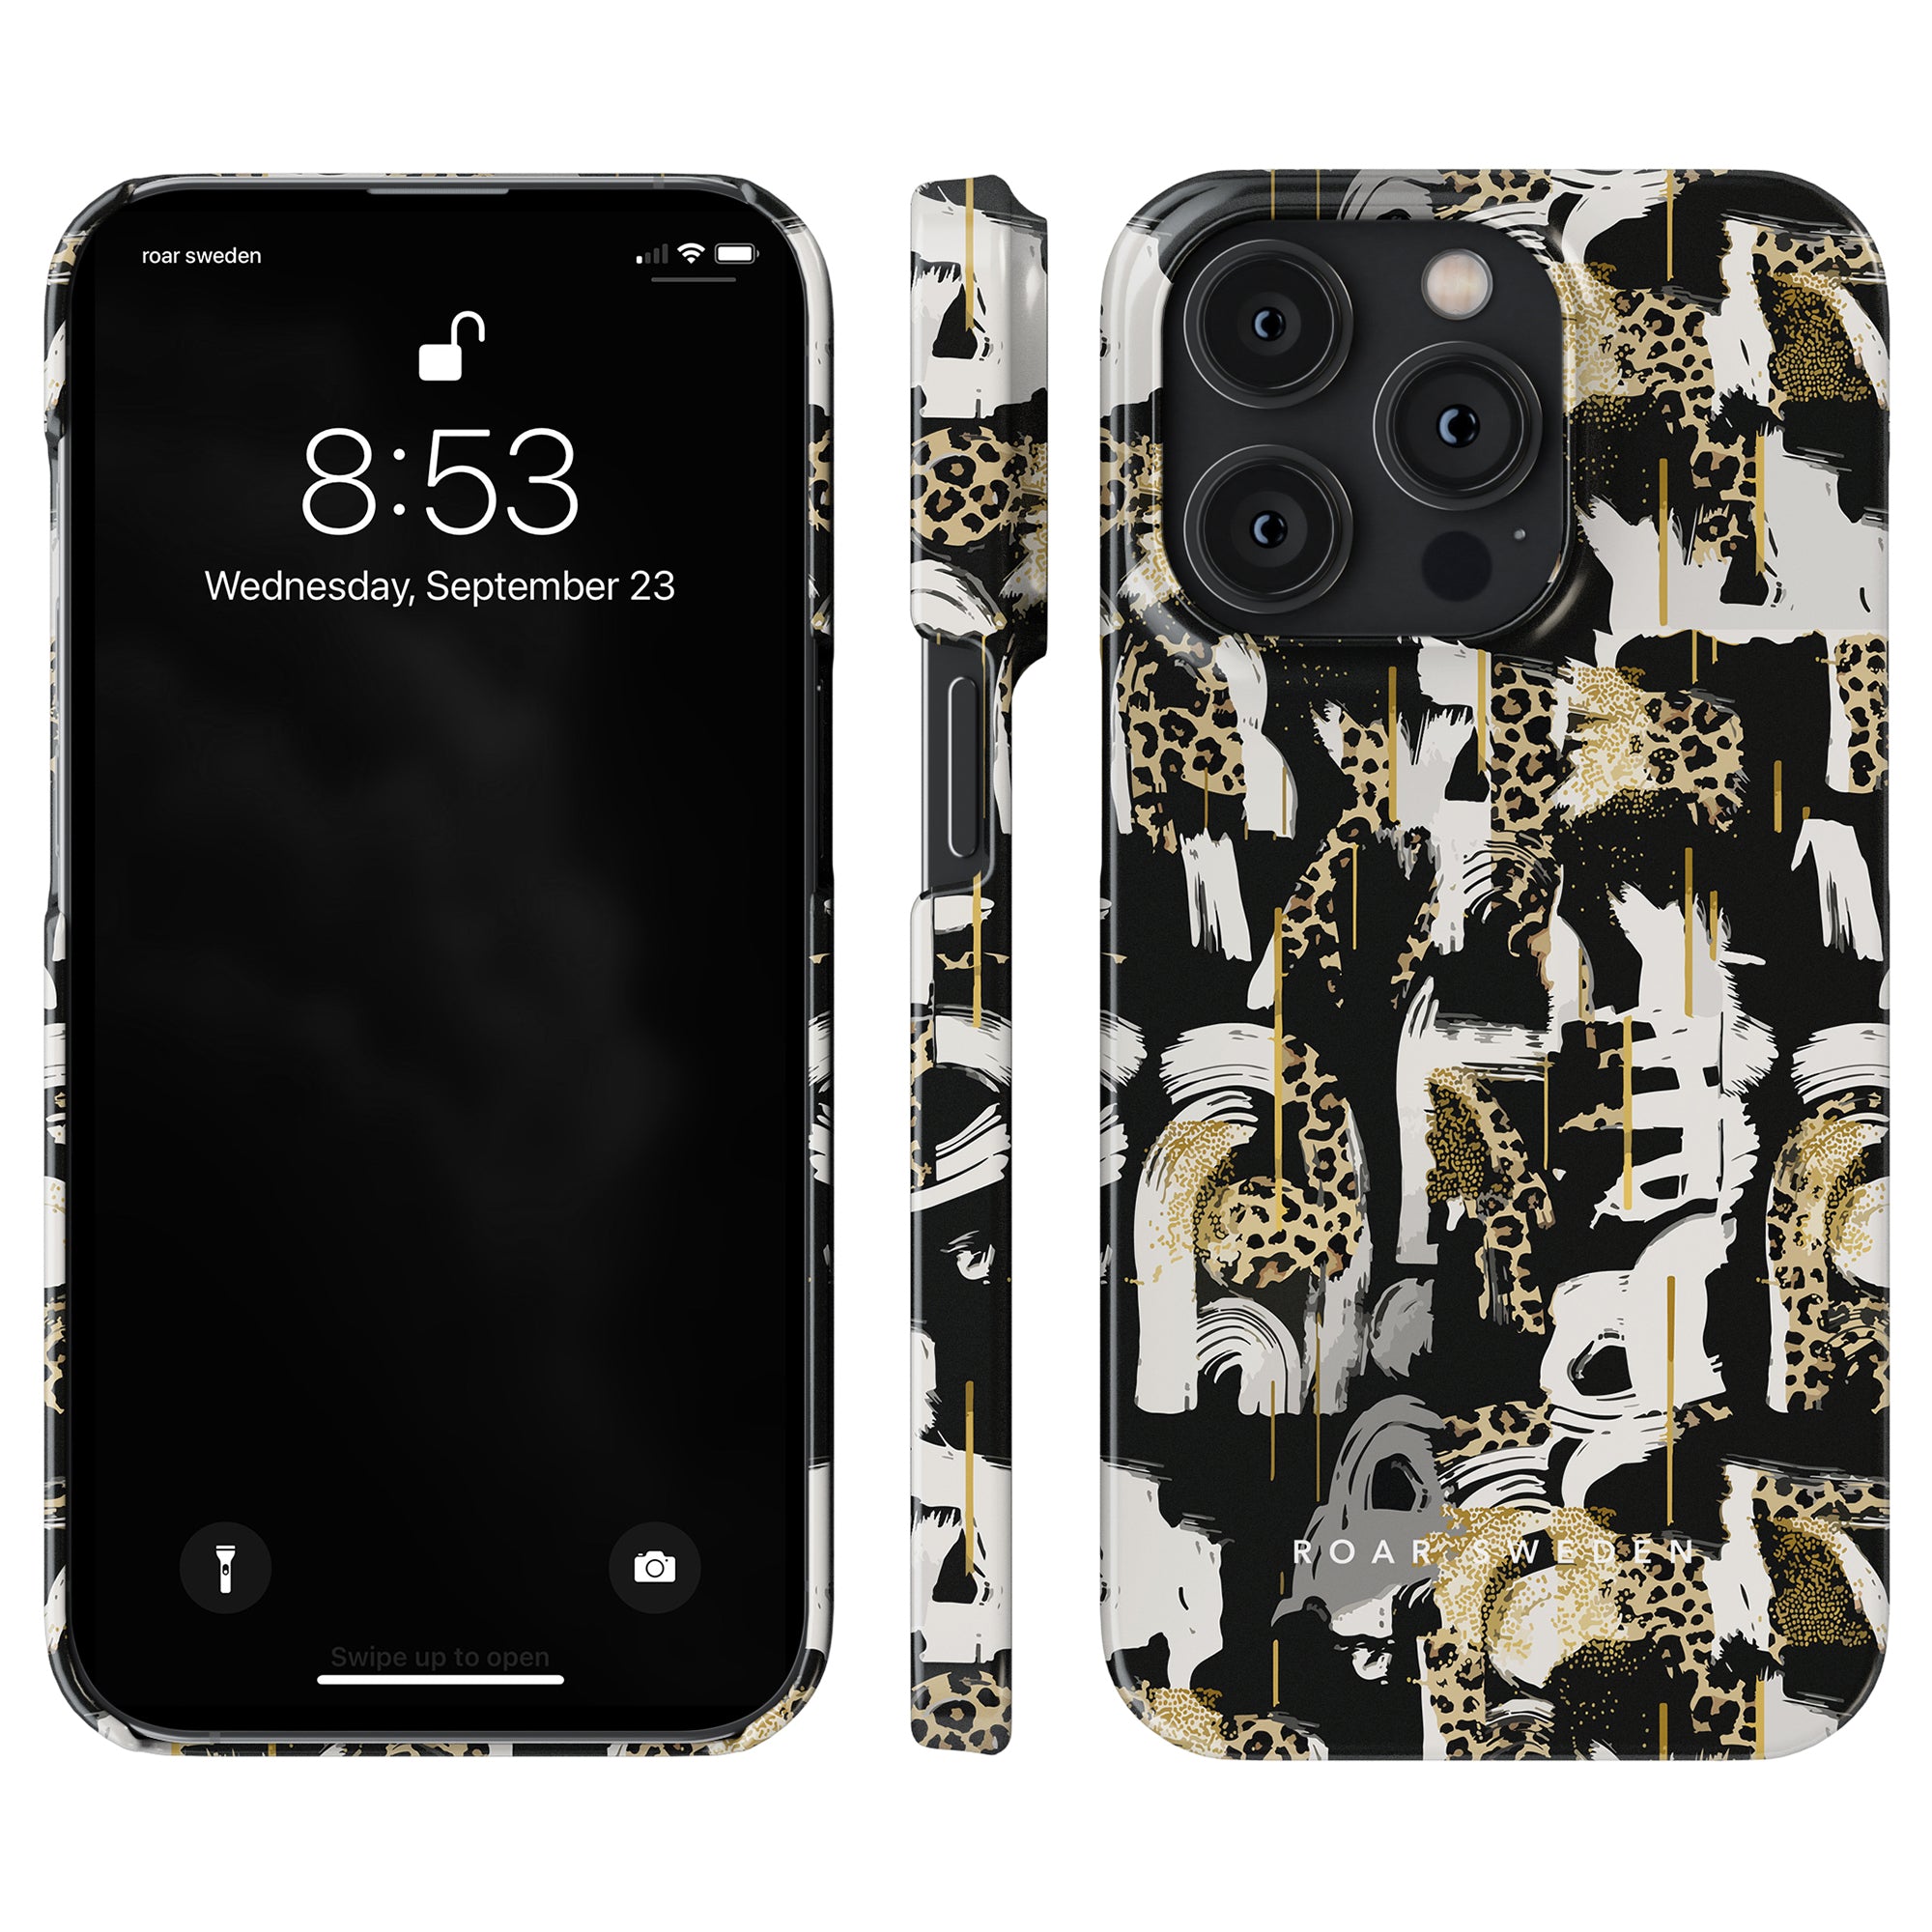 Skate Leo - Slim case: A black and gold iPhone case featuring giraffes.